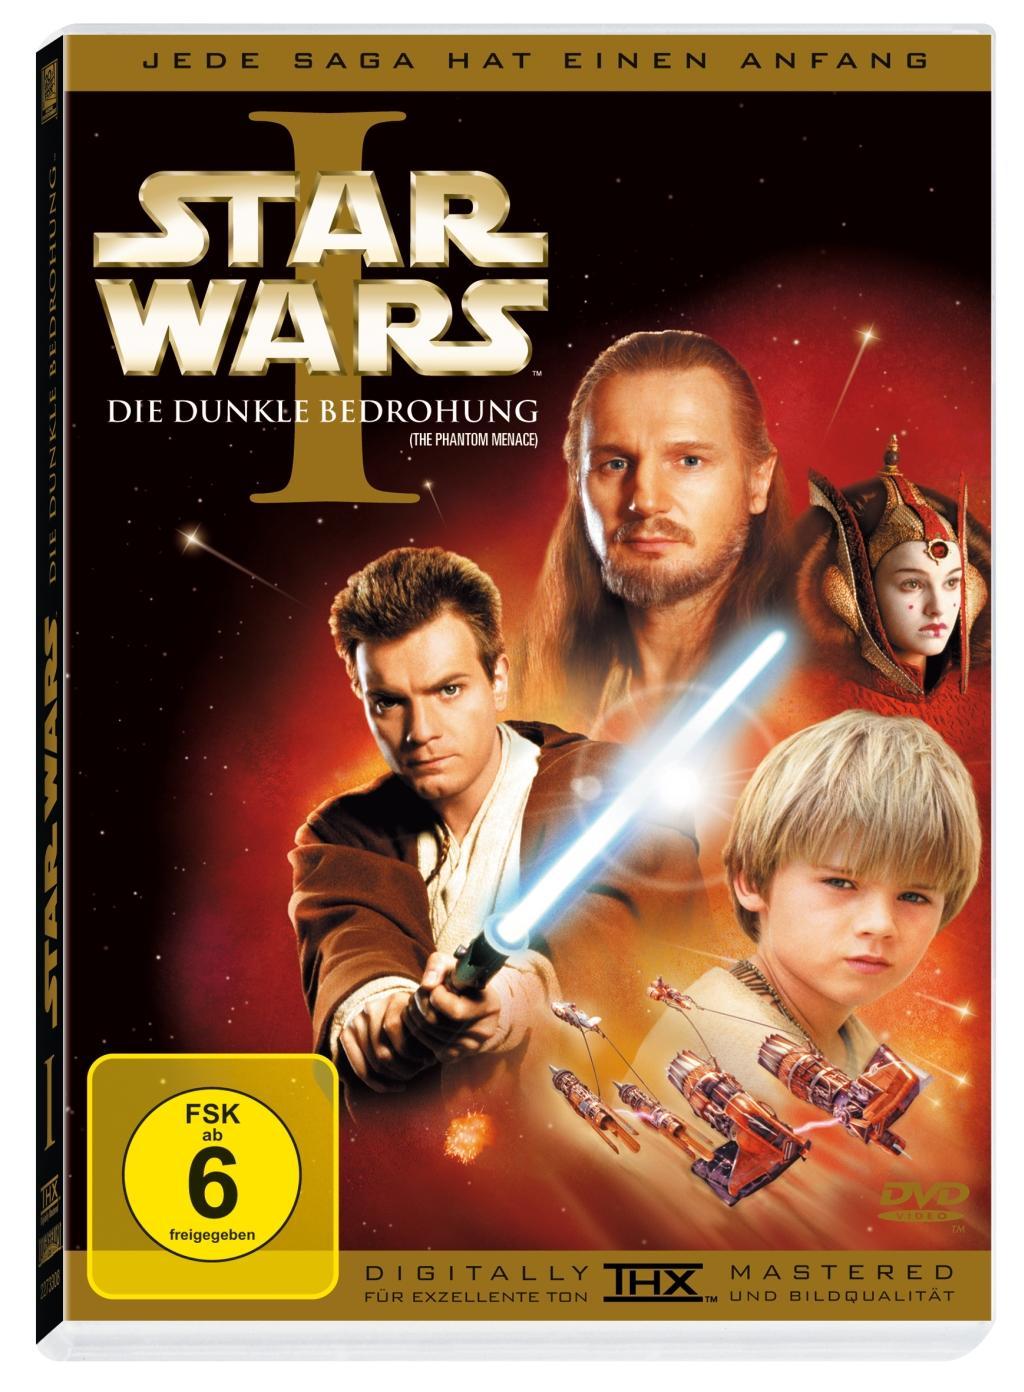 Videoclip Star Wars Episode 1, Die dunkle Bedrohung, 1 DVD George Lucas